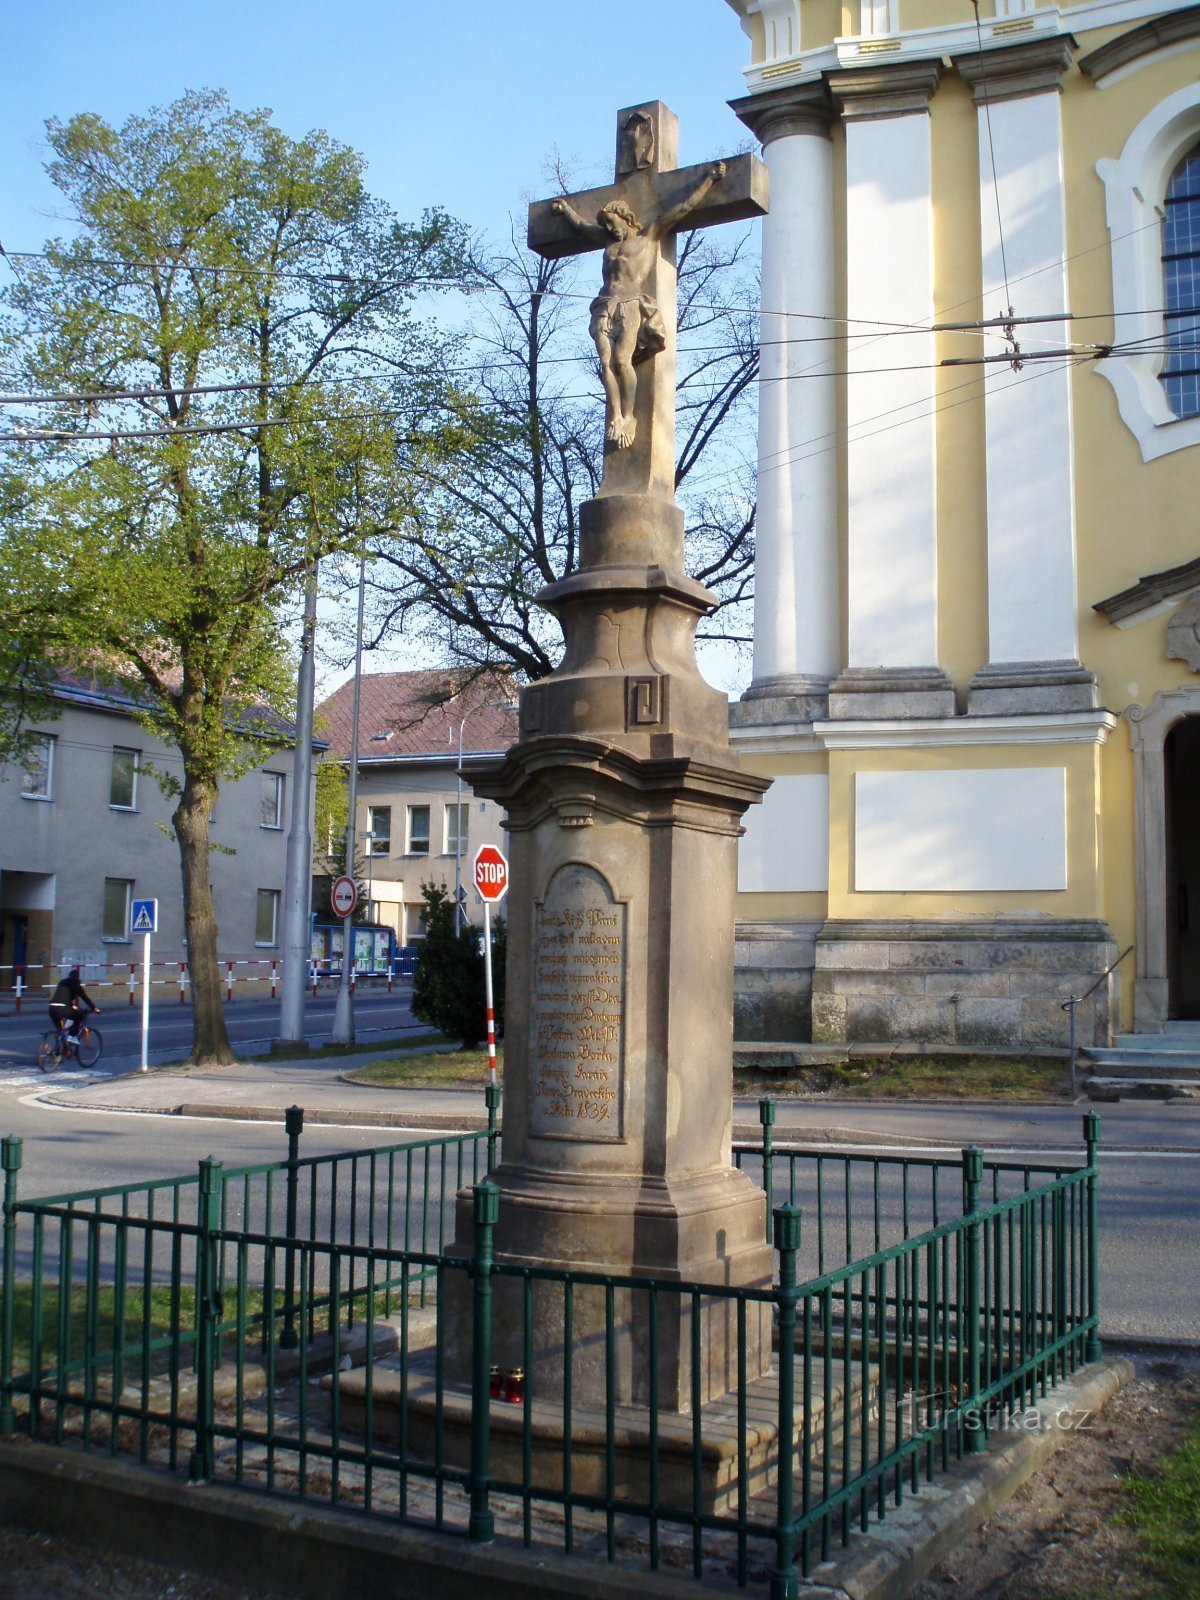 Cross in Nové Hradec Králové (Hradec Králové, 19.4.2011 tháng XNUMX, XNUMX)